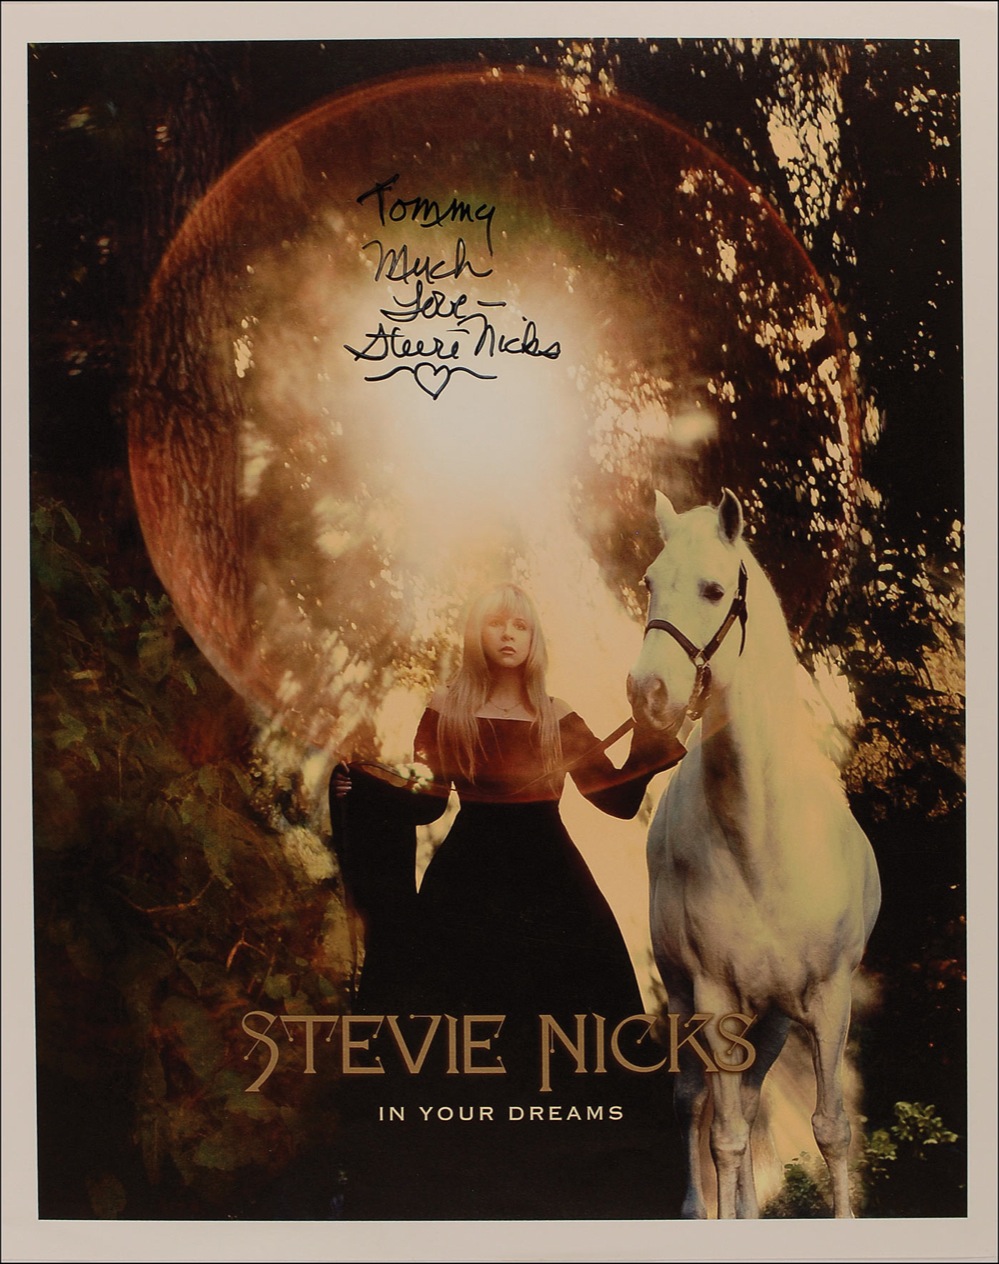 Stevie Nicks In Your Dreams Online Shops